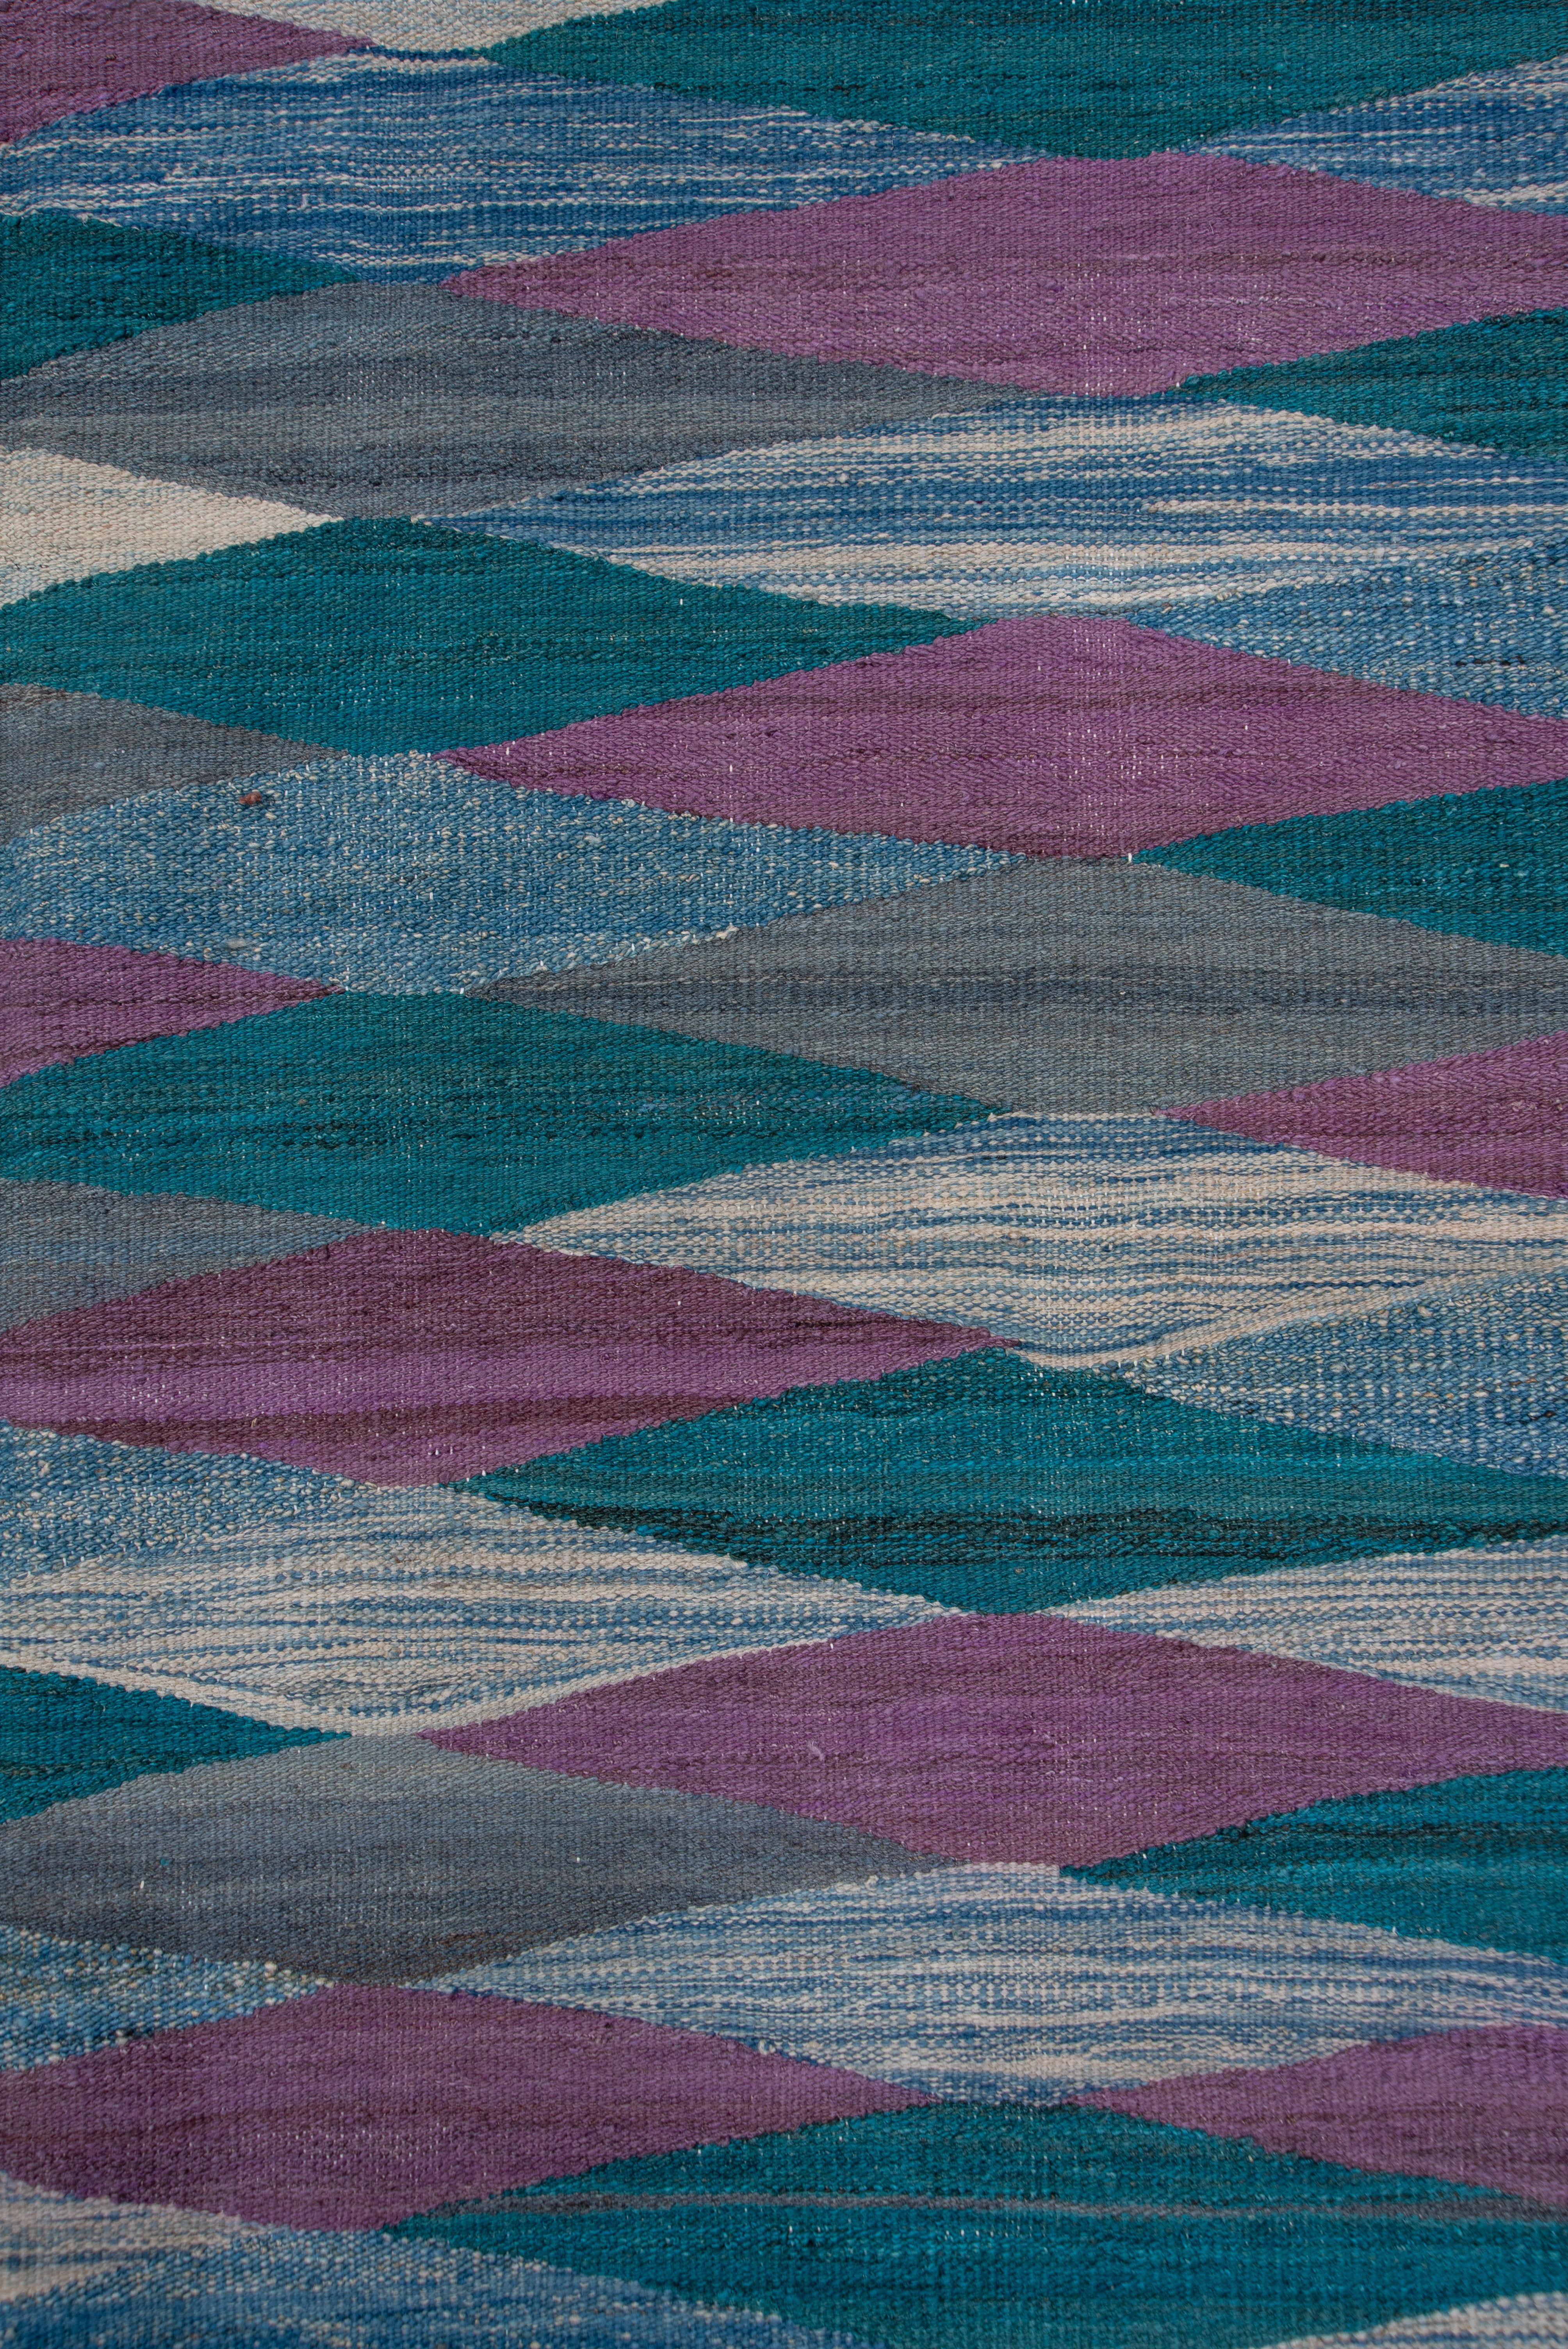 Afghan Colorful % Modern Wool Flatweave Area Rug, Diamond and Wave Design For Sale